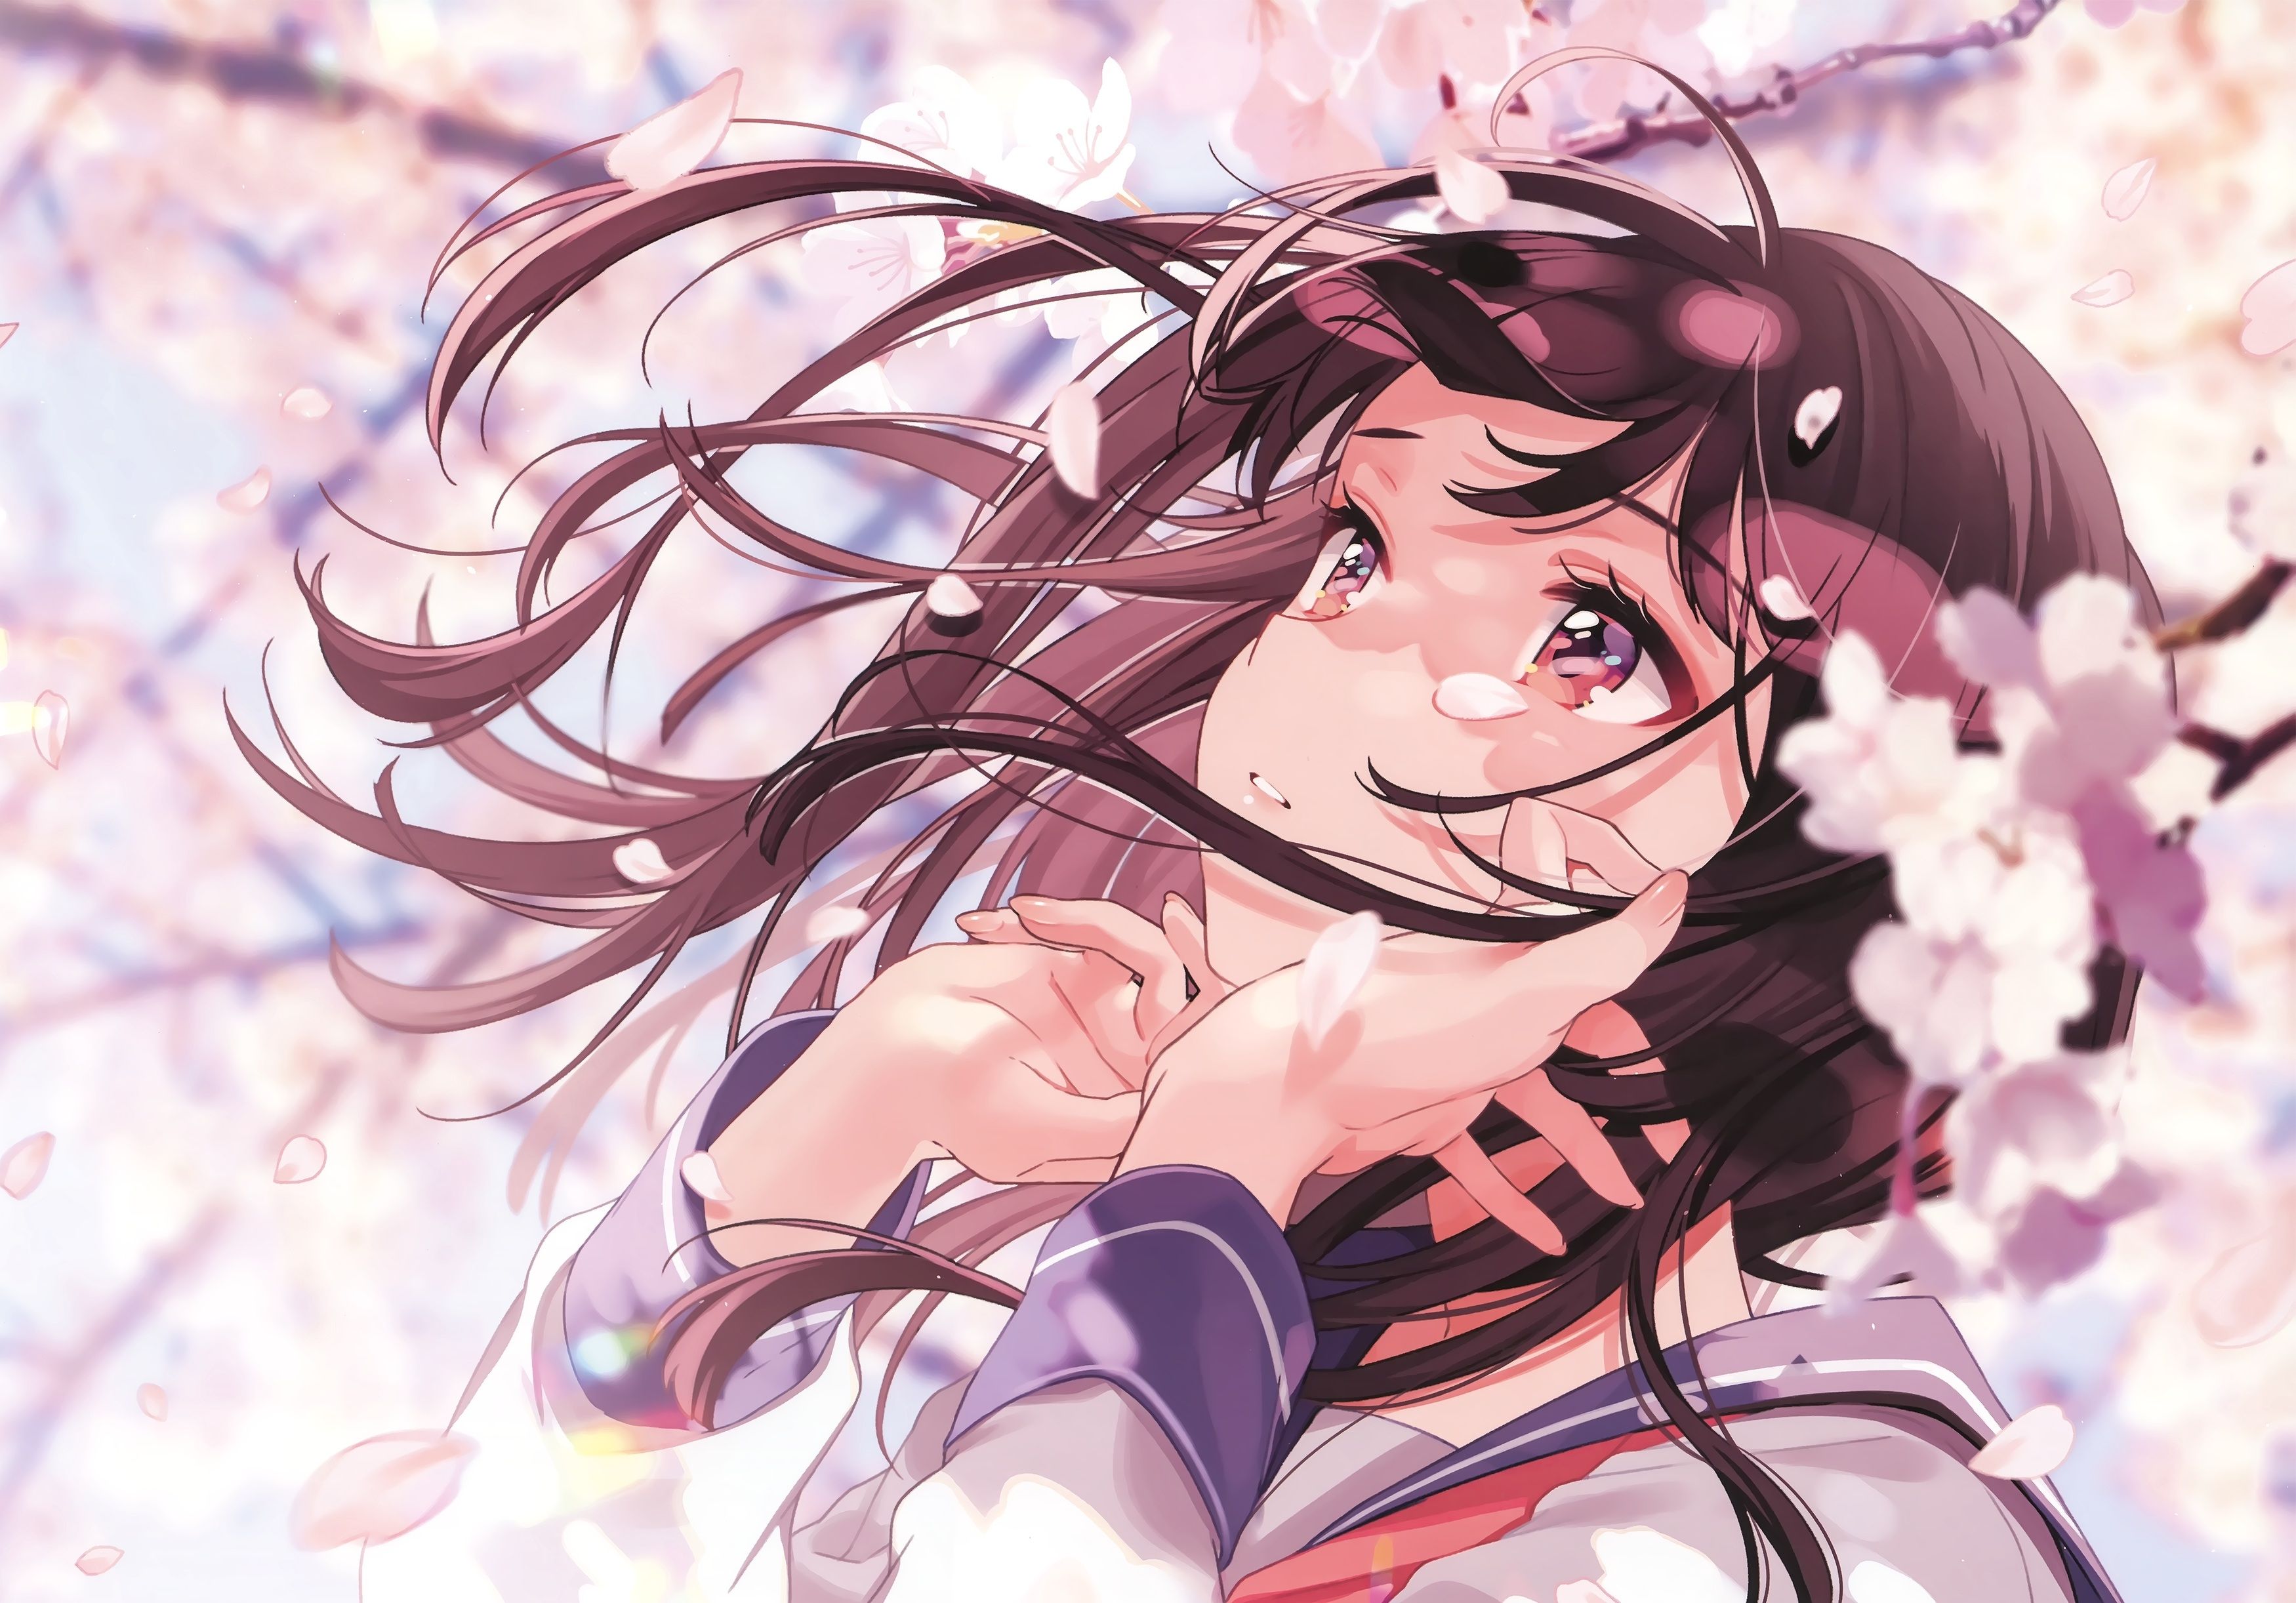 Download 3500x2444 Beautiful Anime Girl, School Uniform, Sakura Blossom, Profile View, Brown Hair Wallpaper